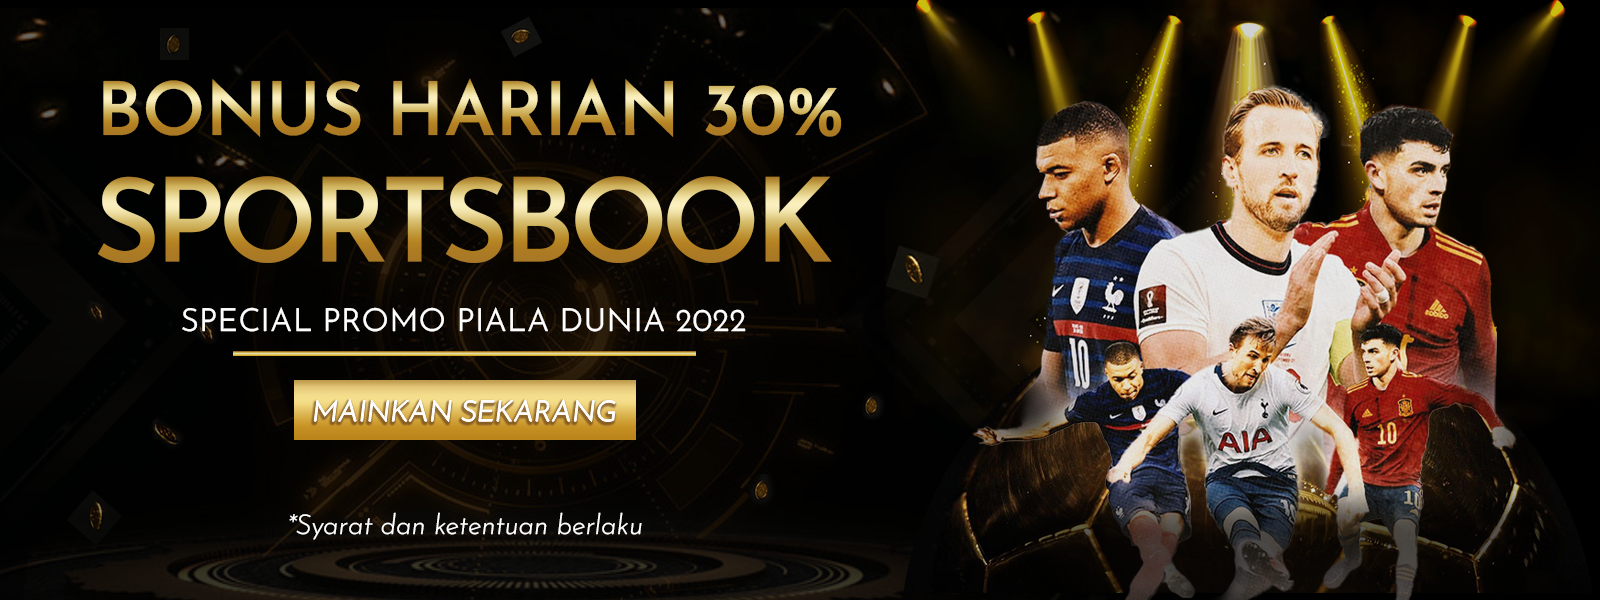 Bonus Harian 30% Sportsbook